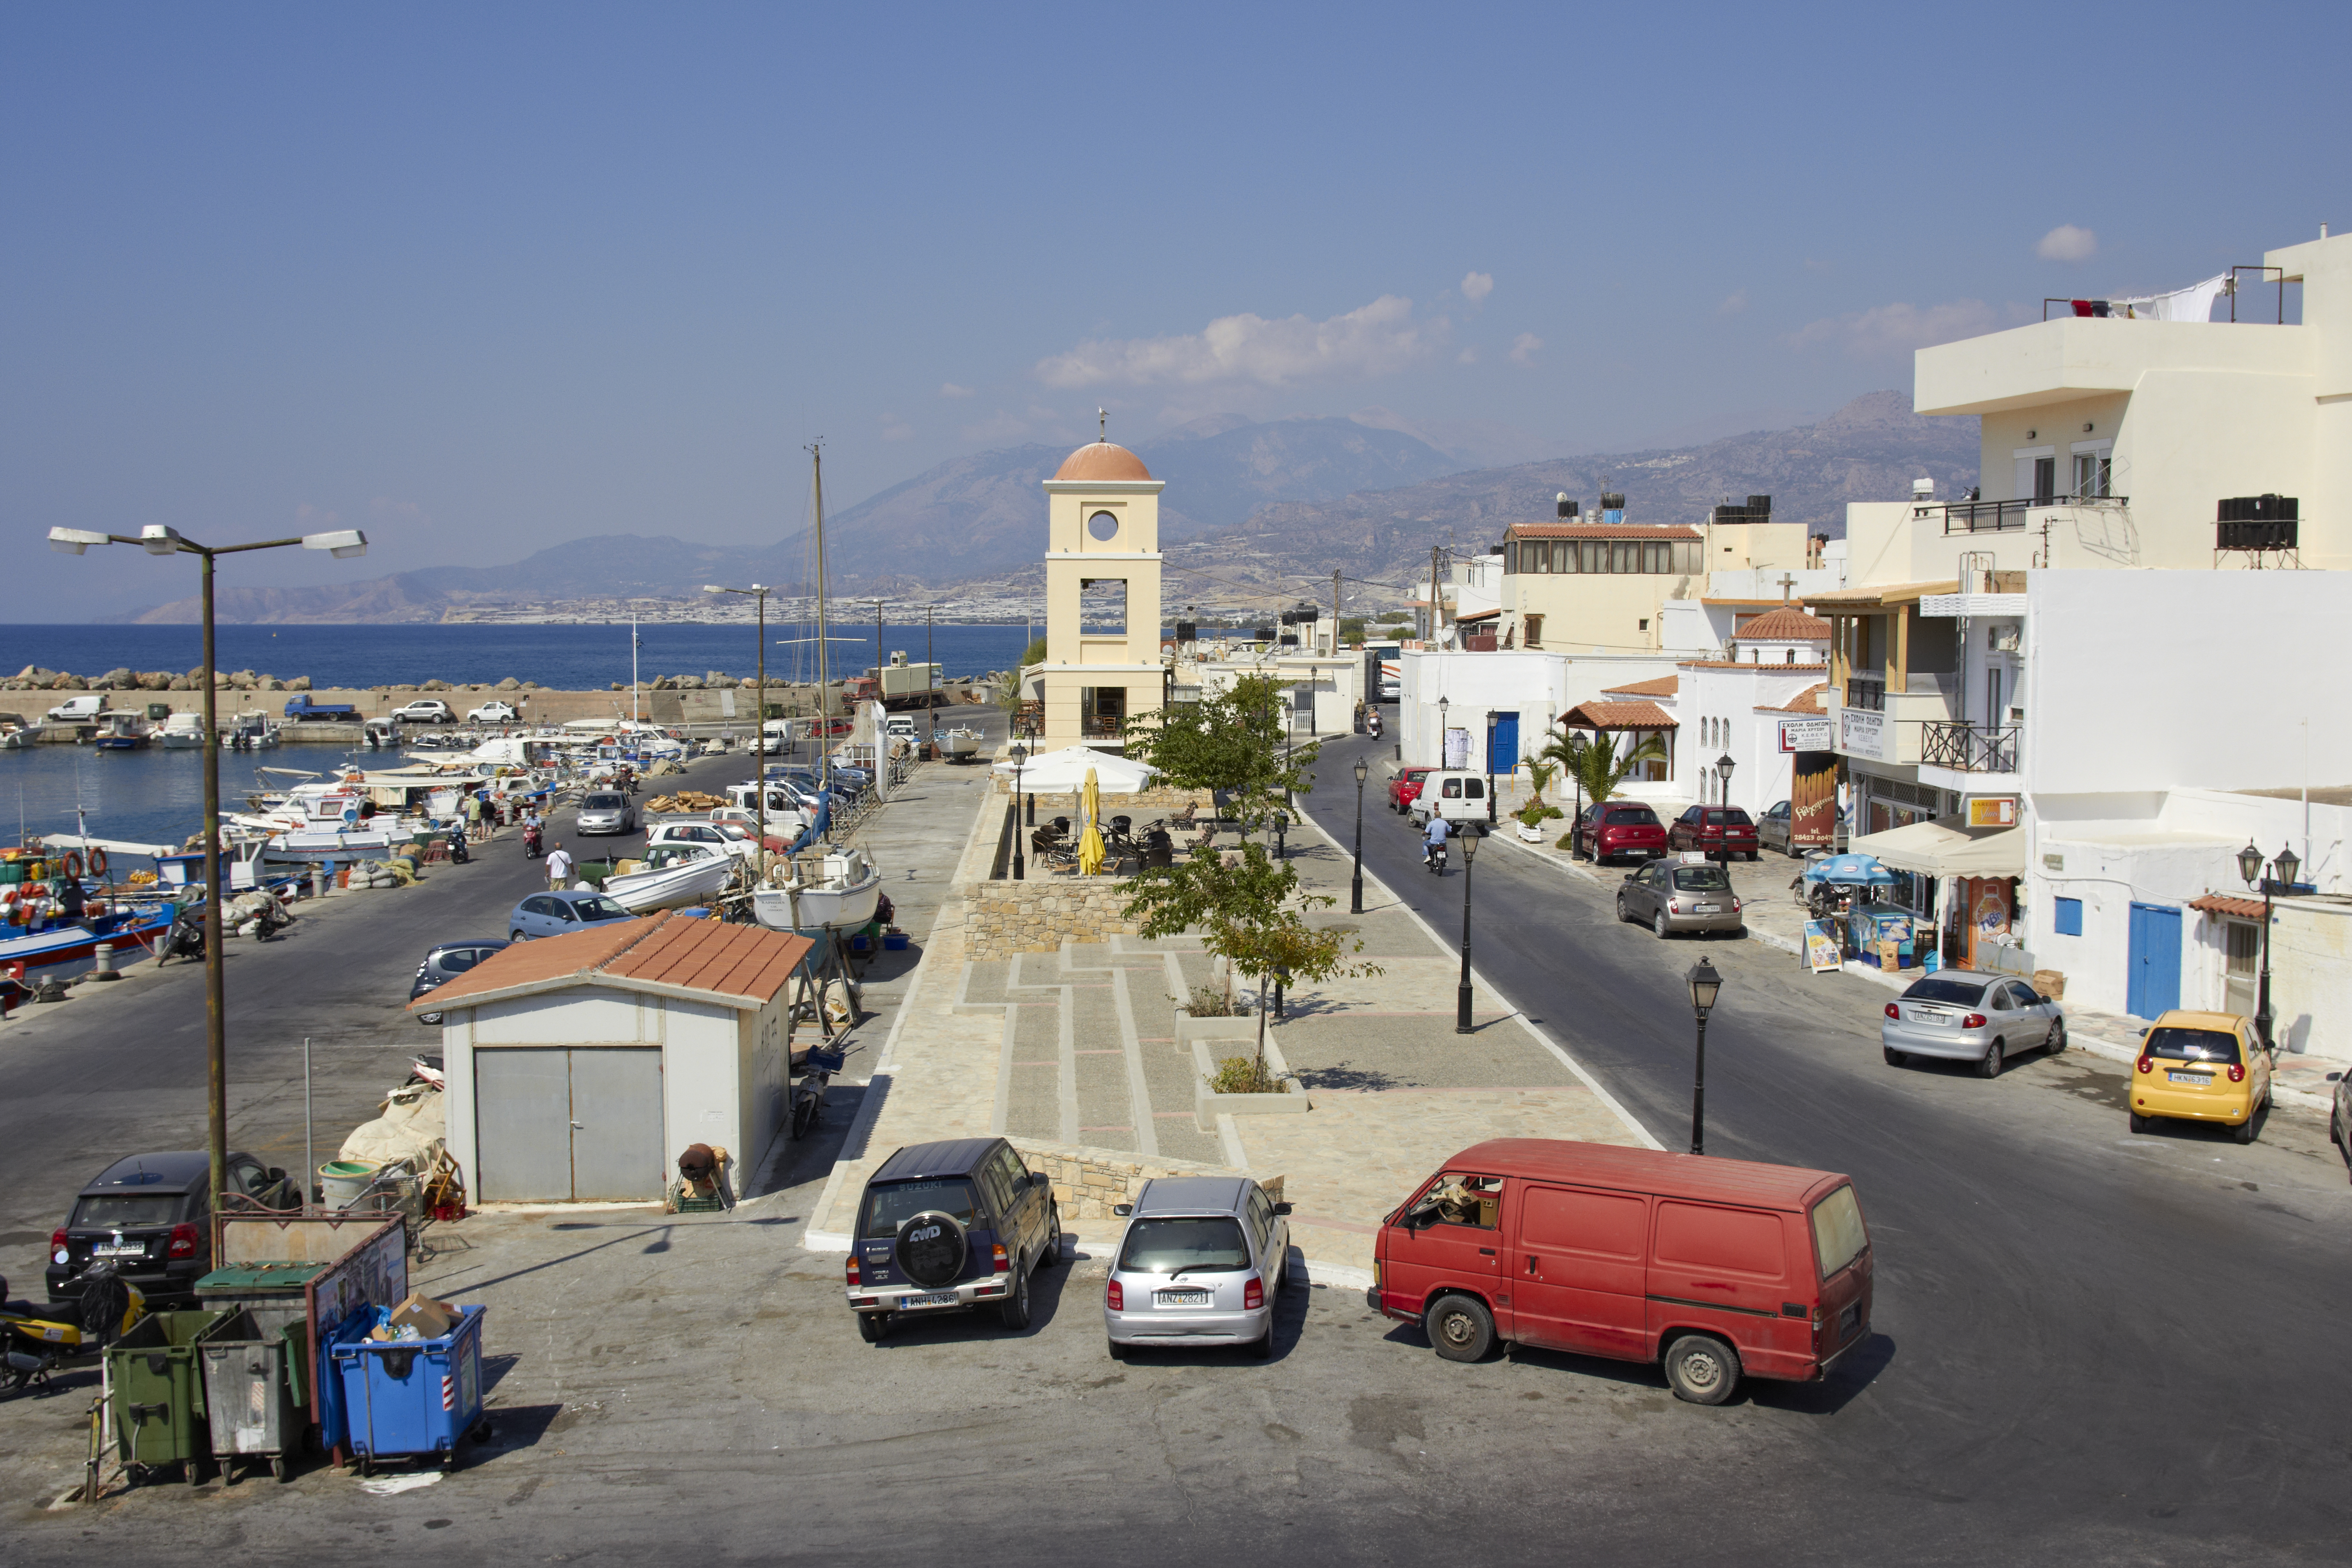 File:117 Crete 13.09.2012.jpg - Wikimedia Commons